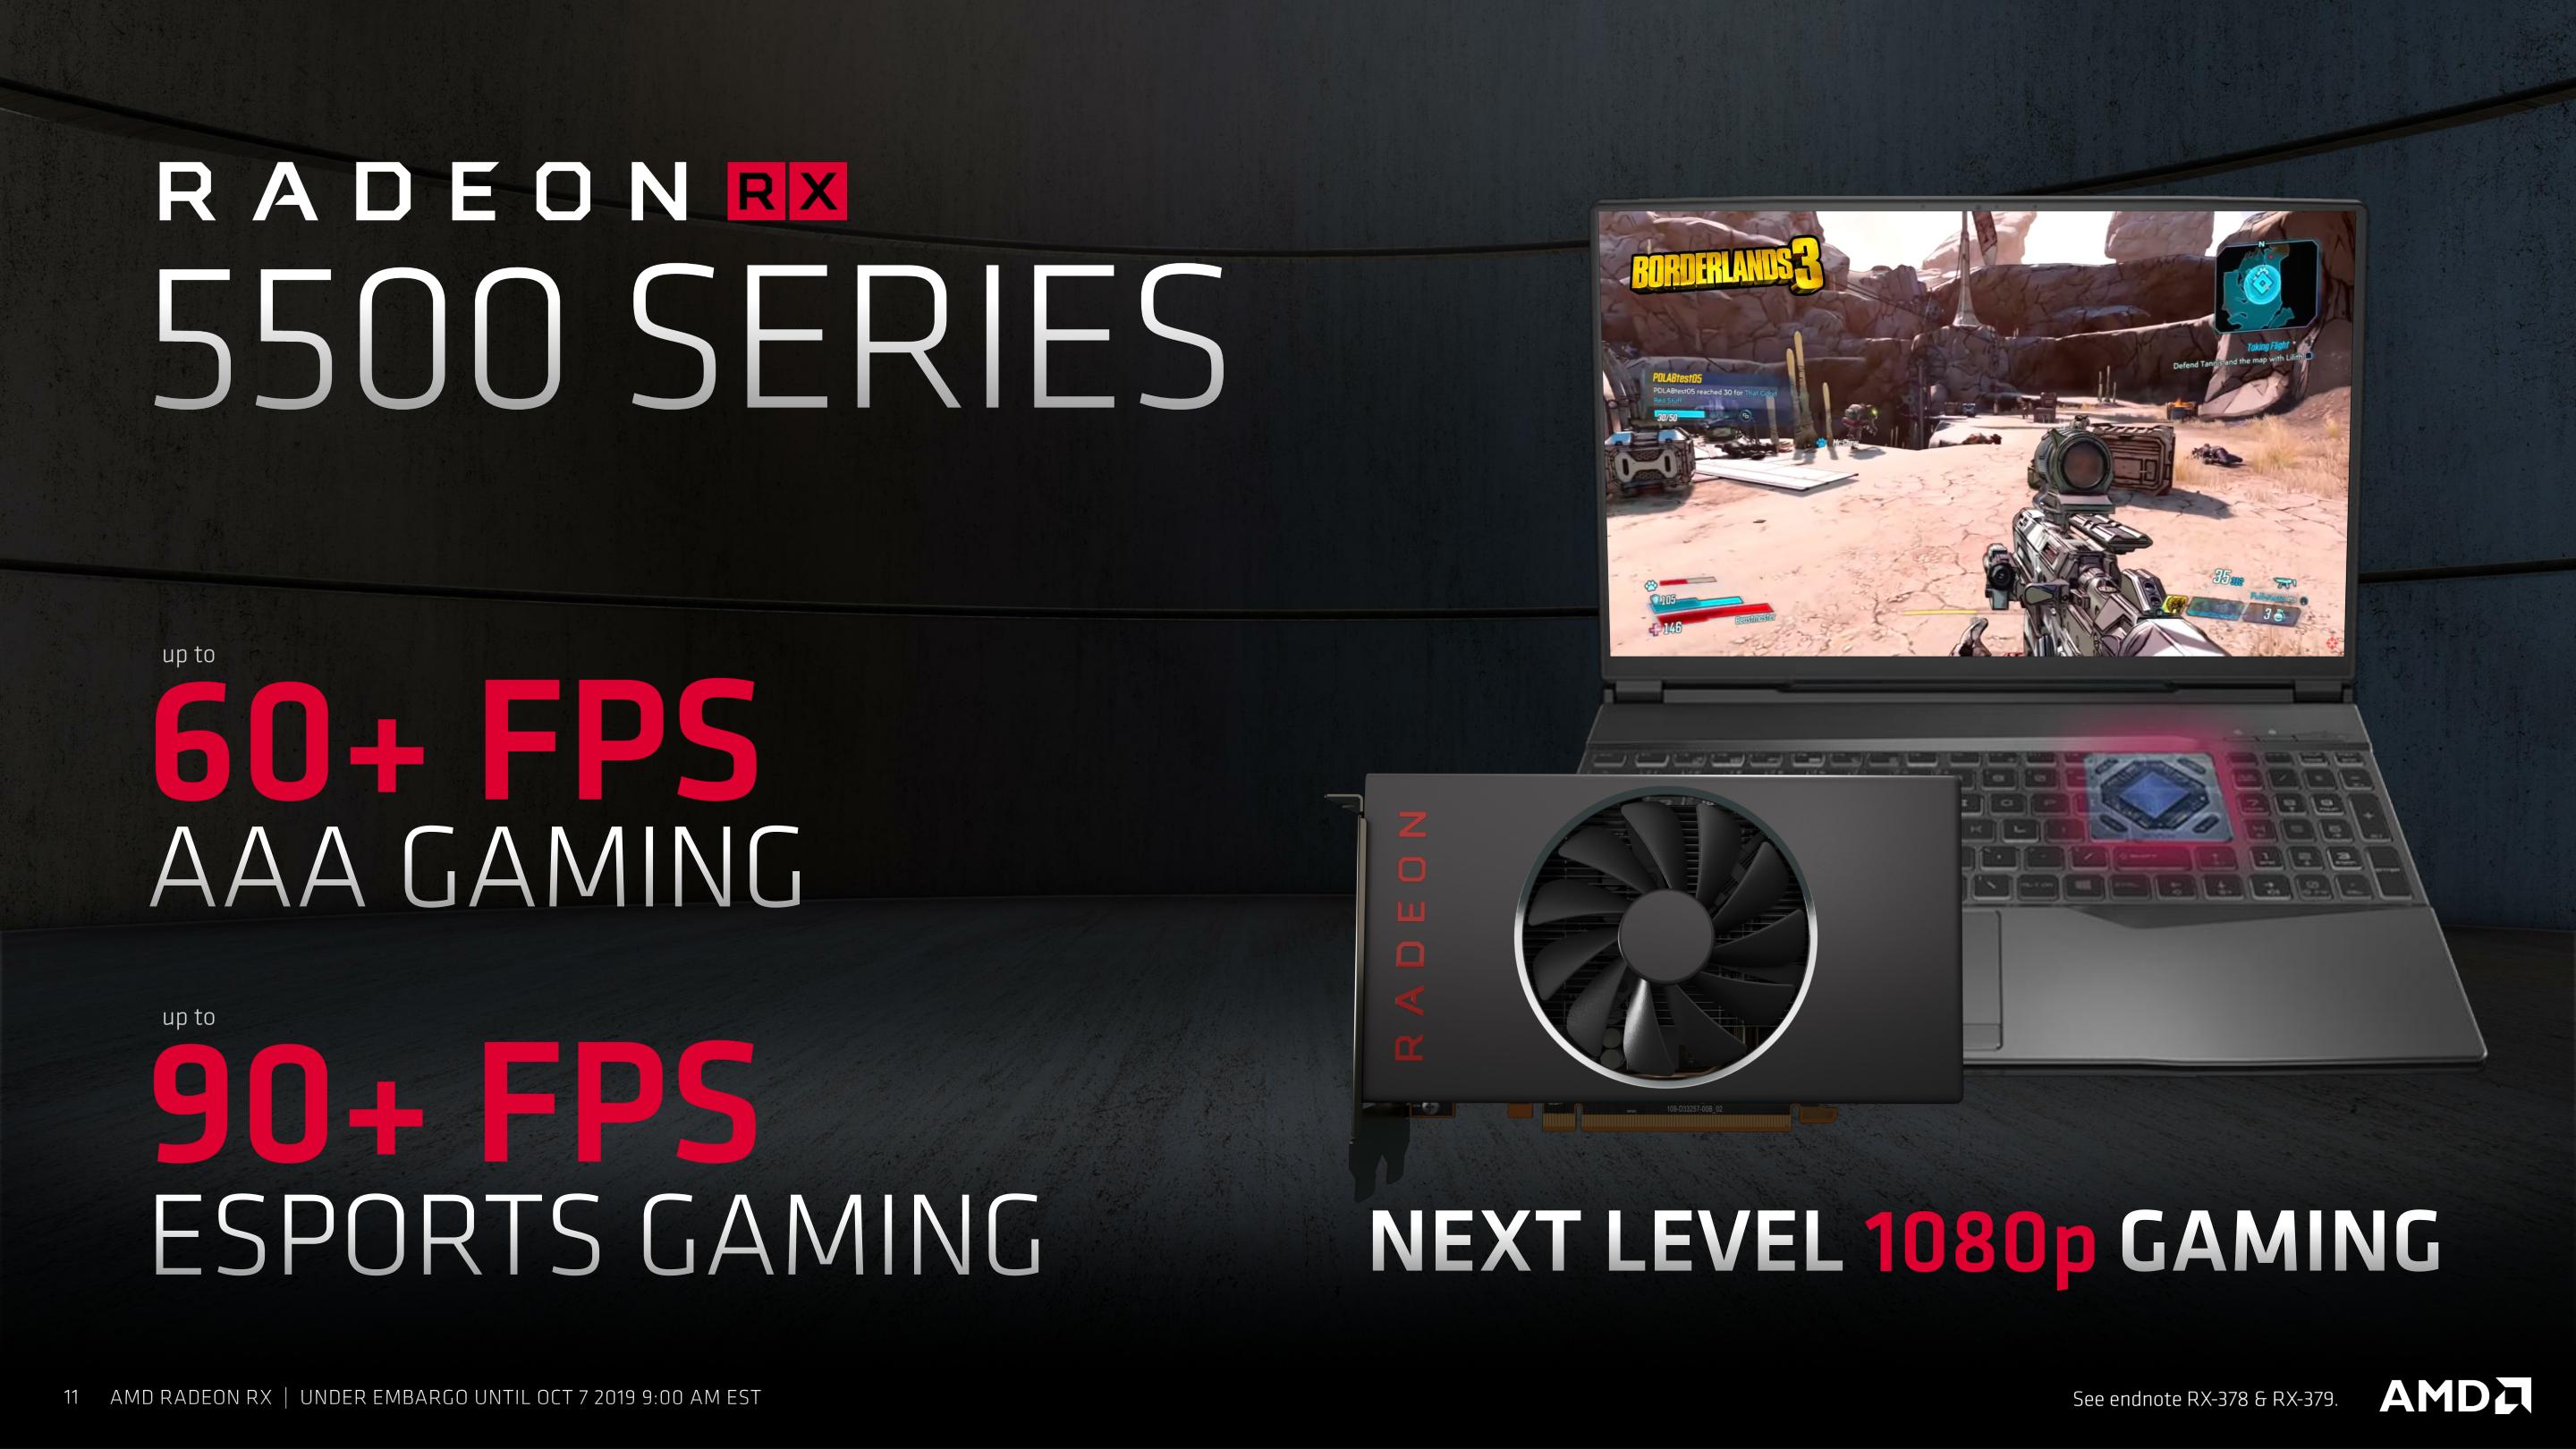 Amd Announces Radeon Rx 5500 Series 1080p Gaming For Desktop Mobile Coming This Quarter